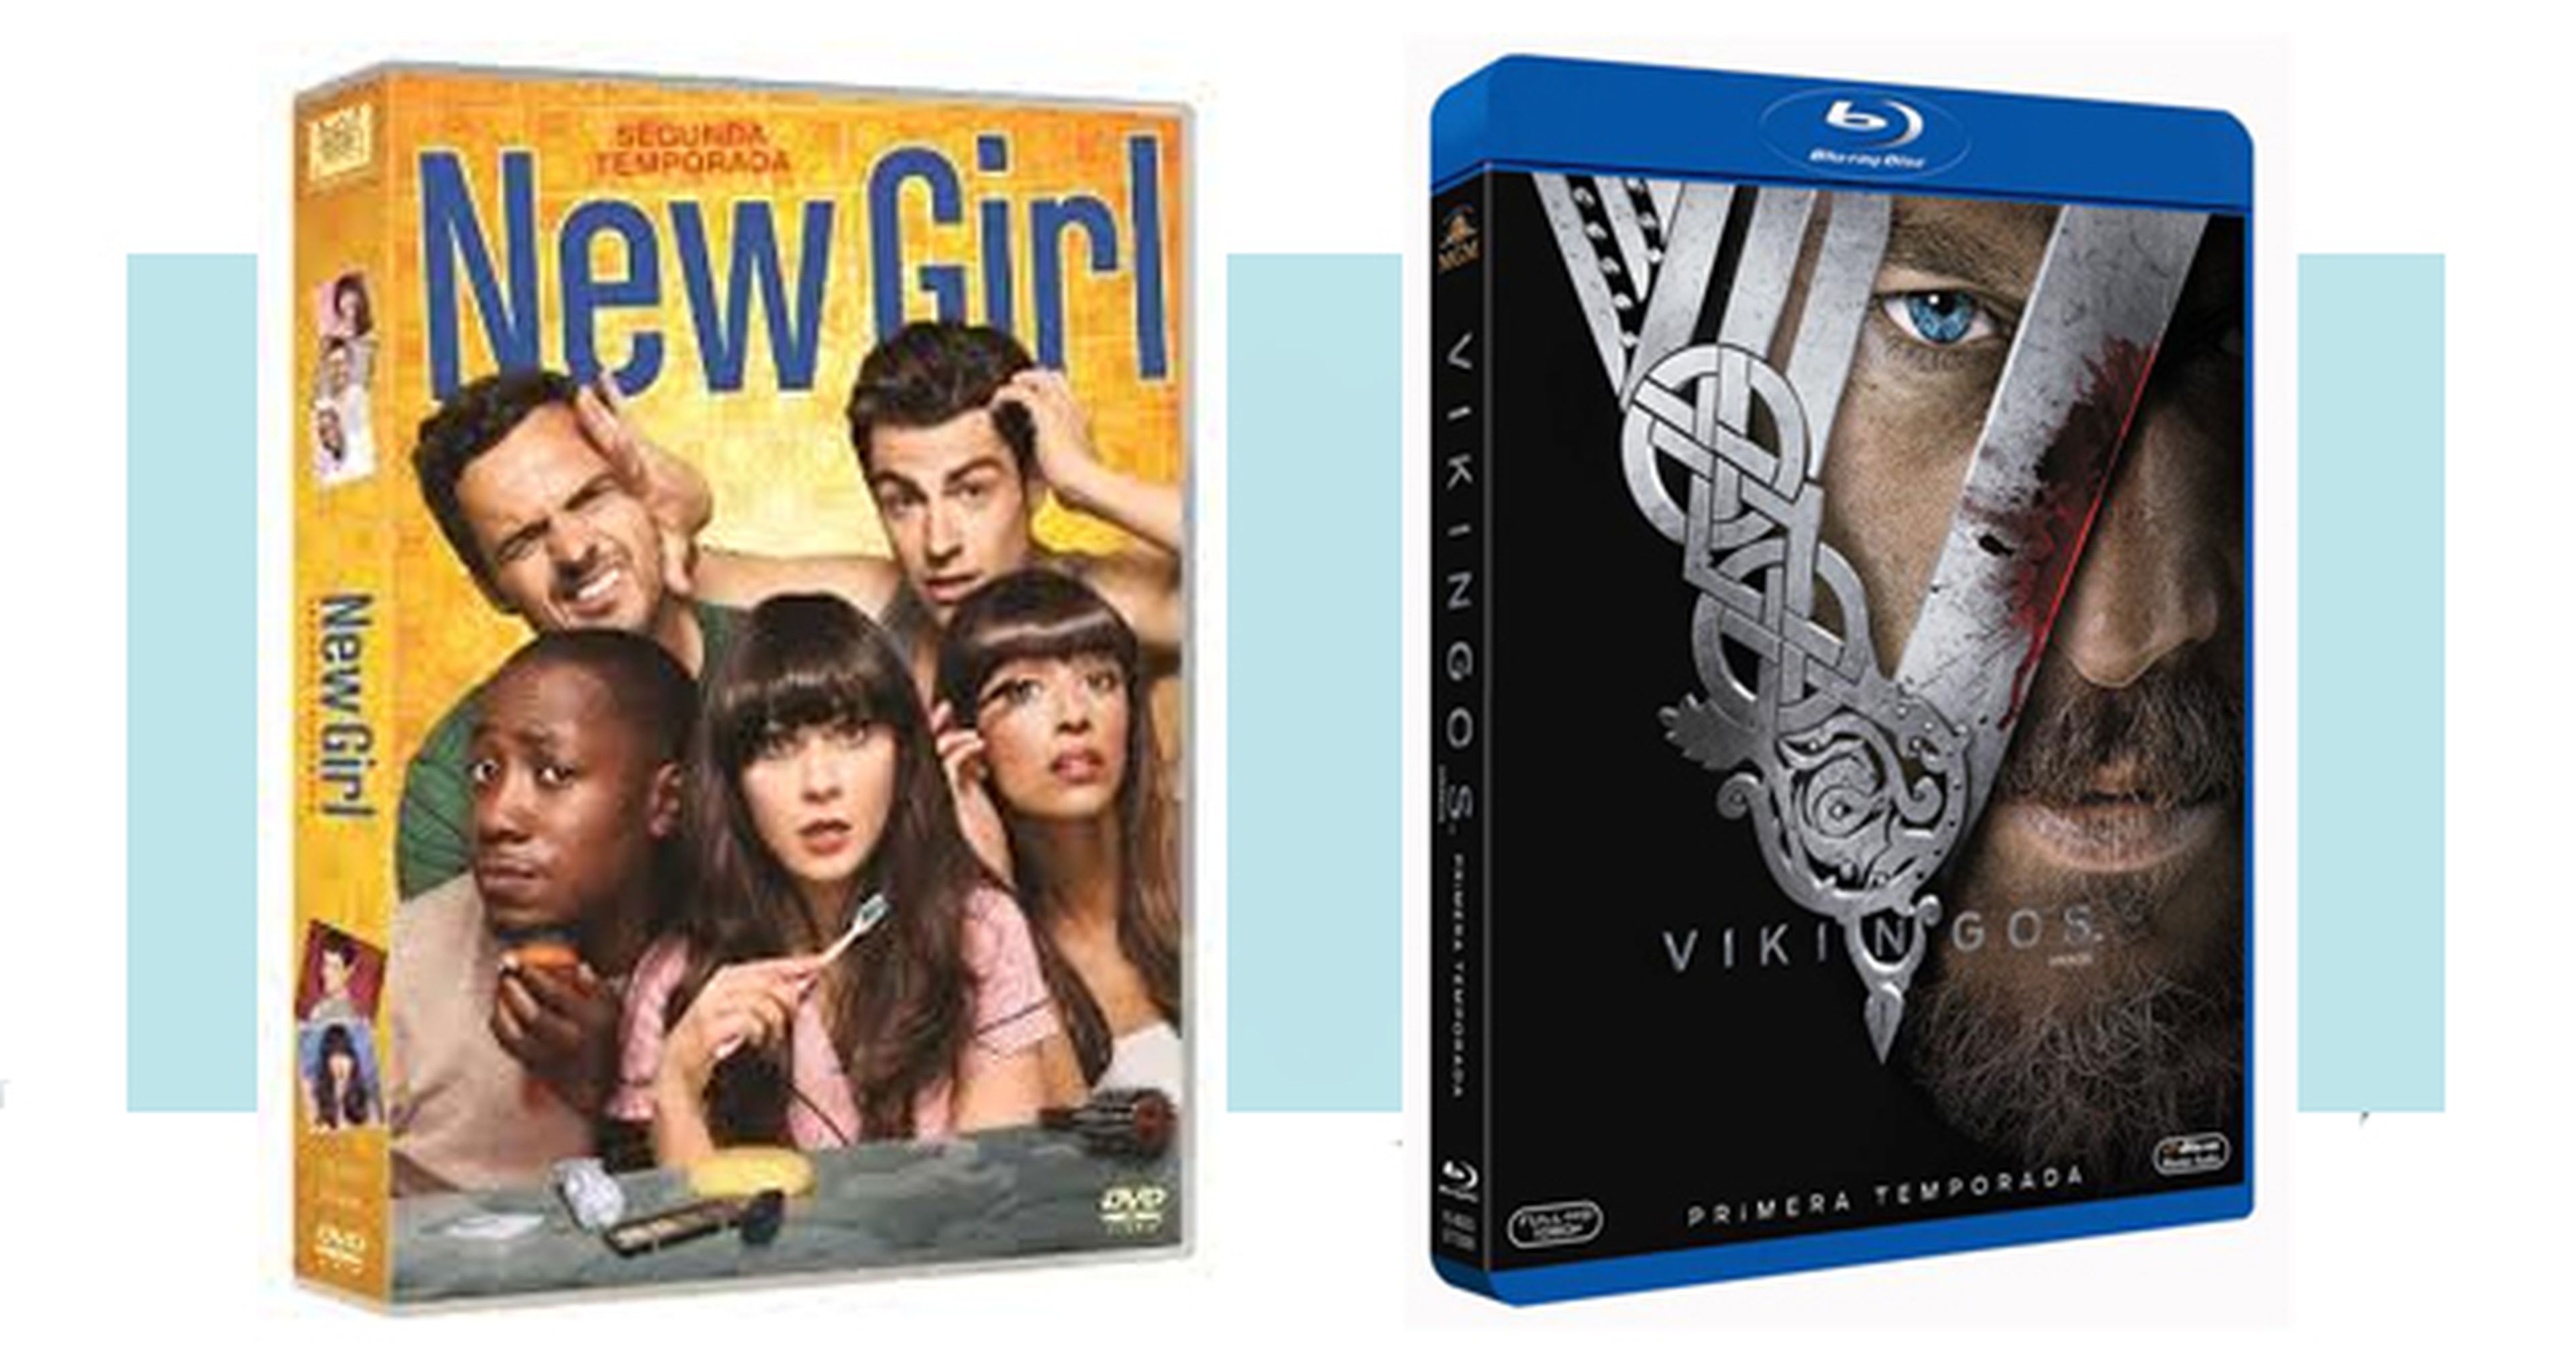 New Girl T2 y Vikingos T1 en DVD muy pronto